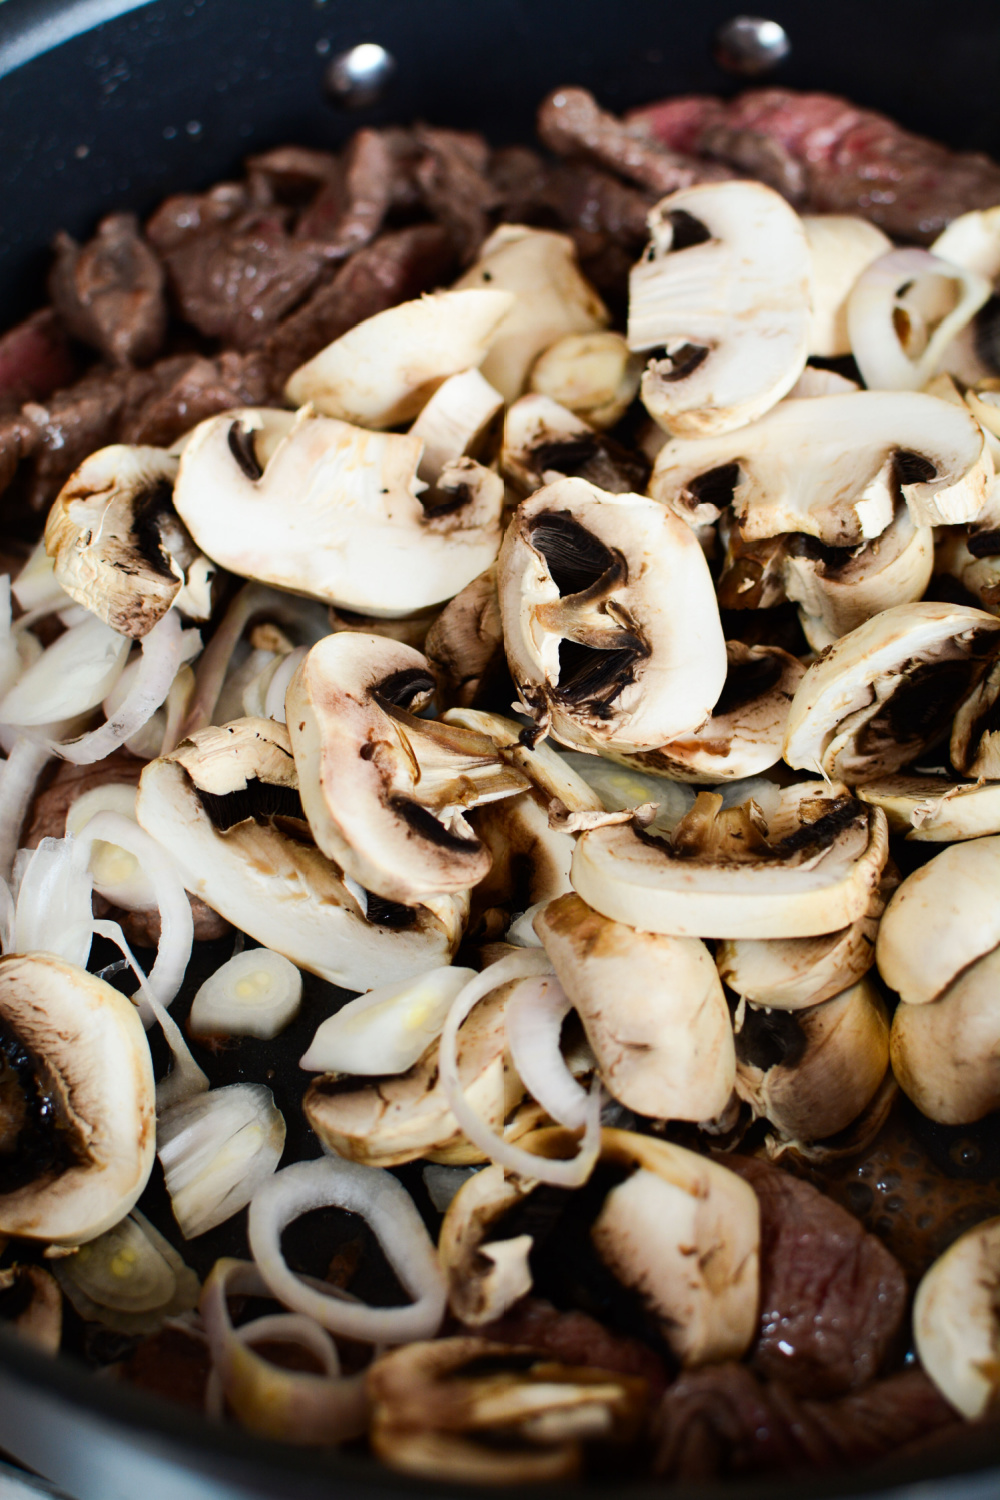 mushrooms added to pan